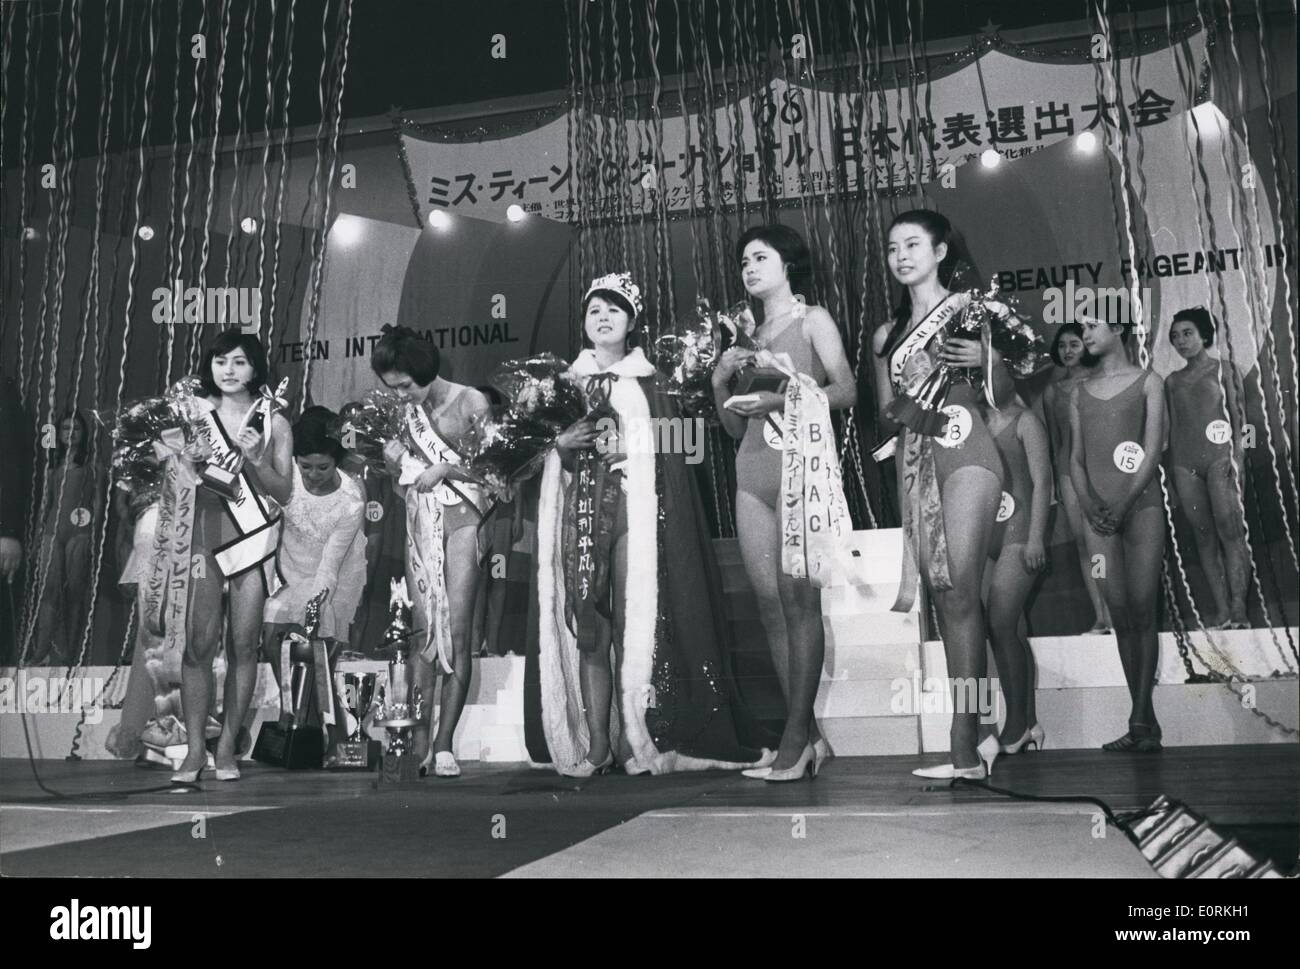 Jan 1, 1960 - Miss Teenager of Japan: Miss Teenager Contest was held at Kanda, Tokyo, where the 17 year old Yukiko Yamanaka was Stock Photo